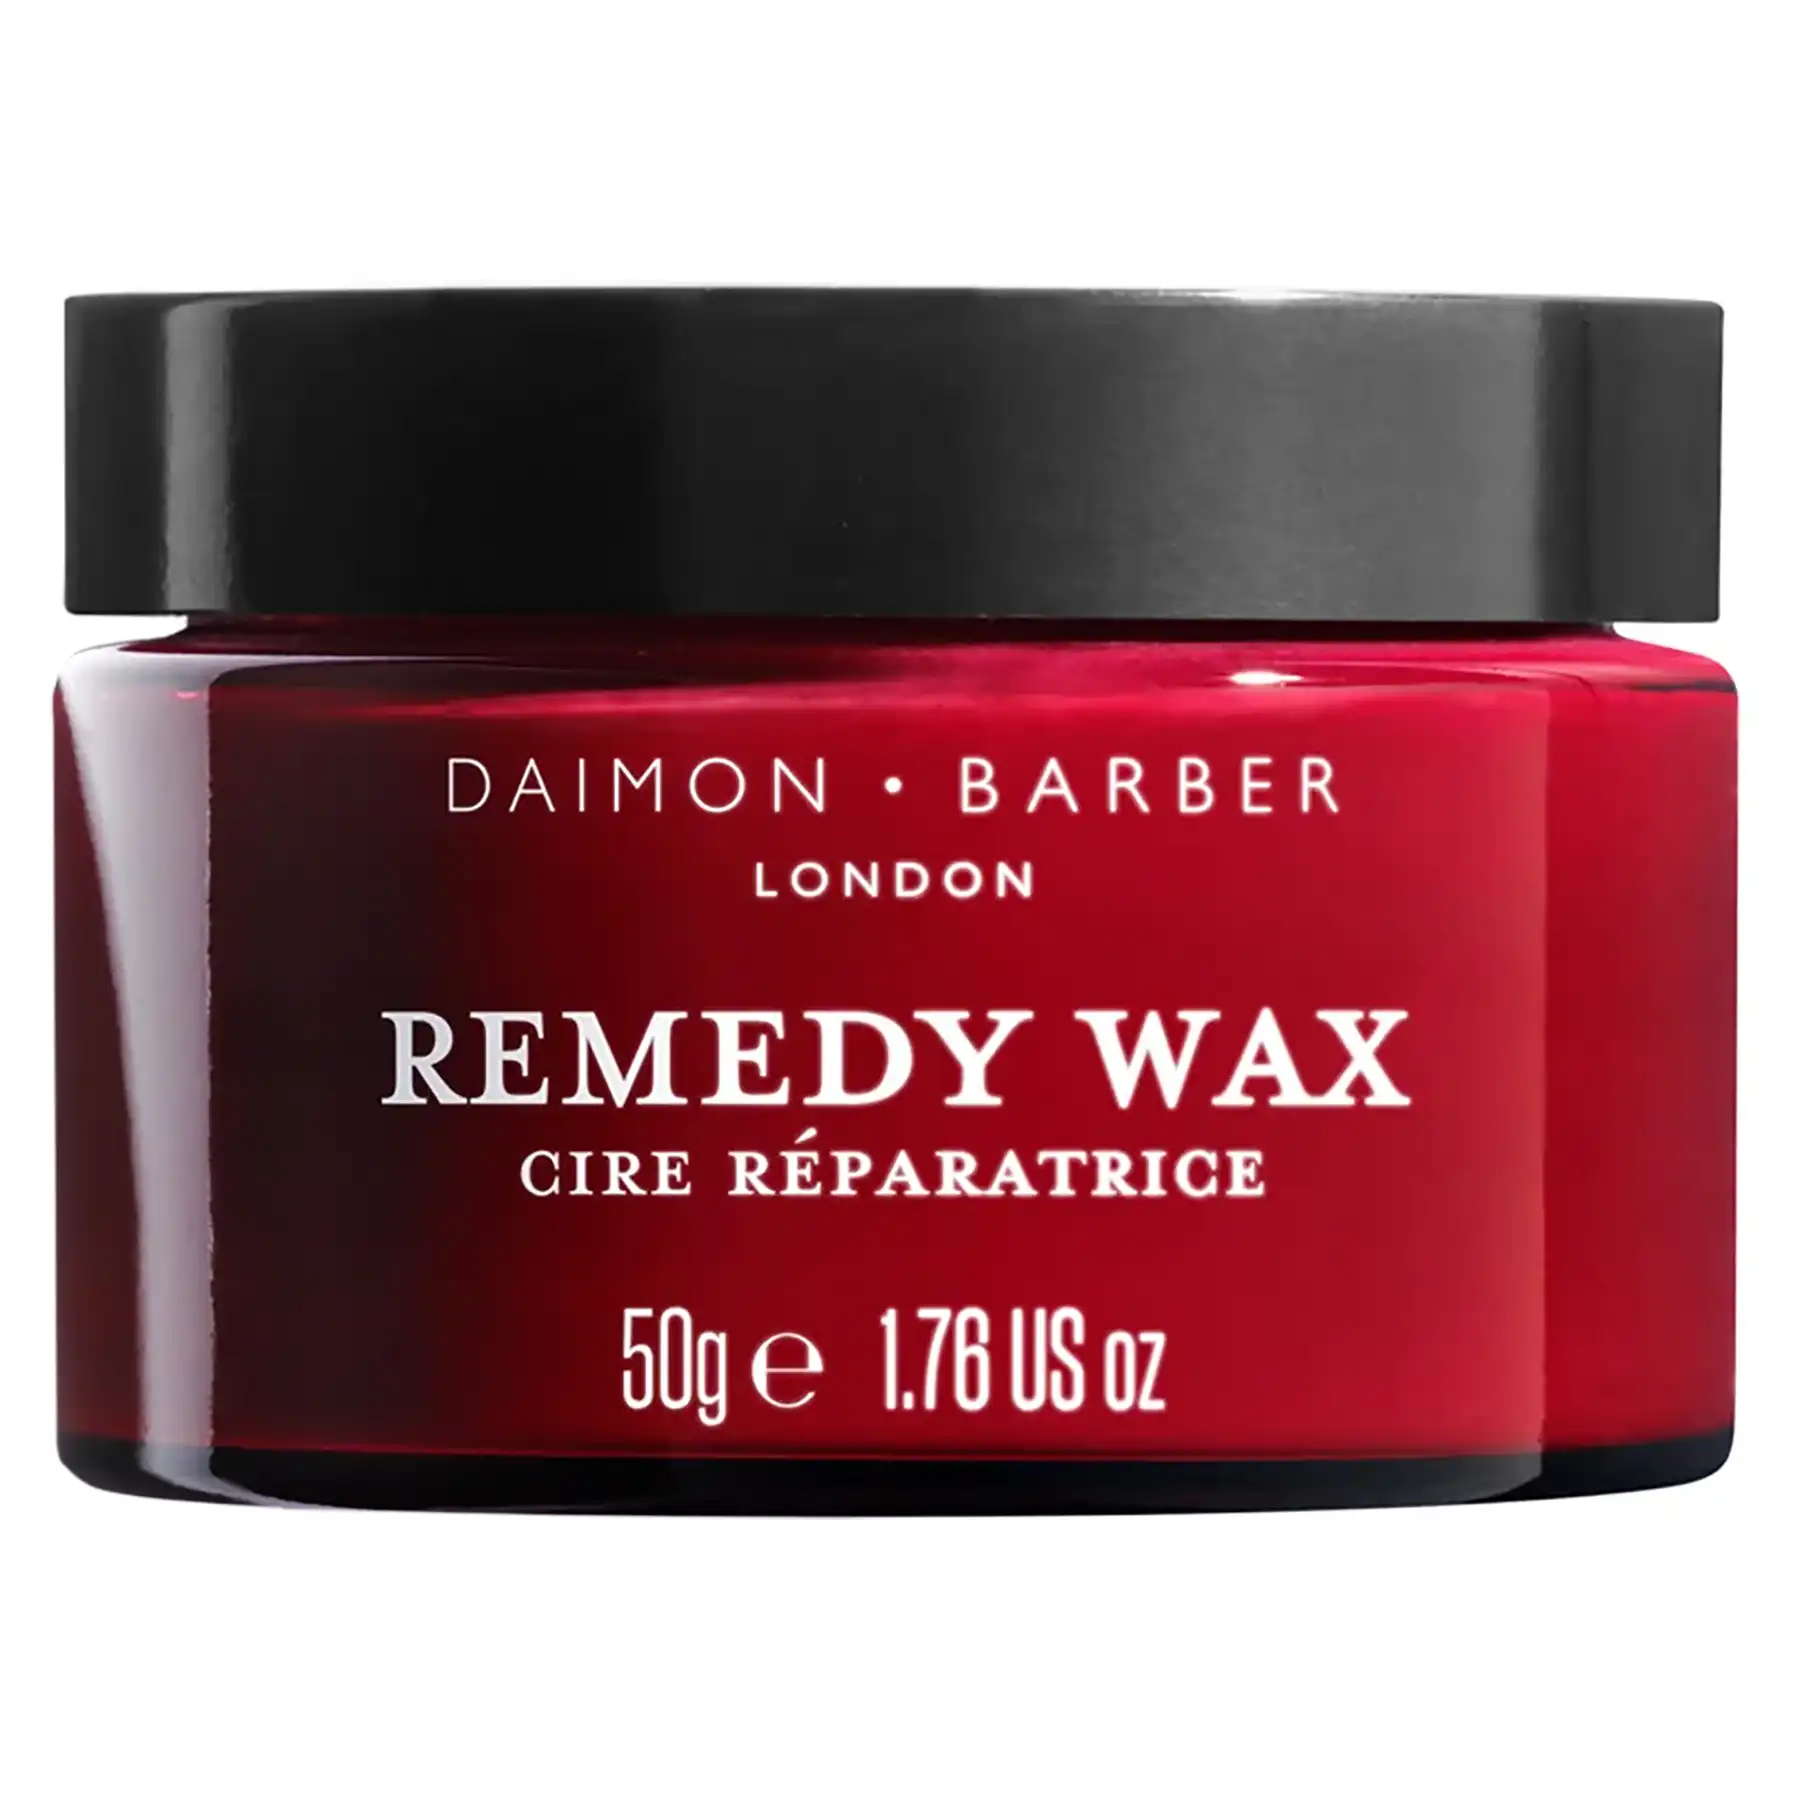 Daimon Barber Remedy Wax 50g